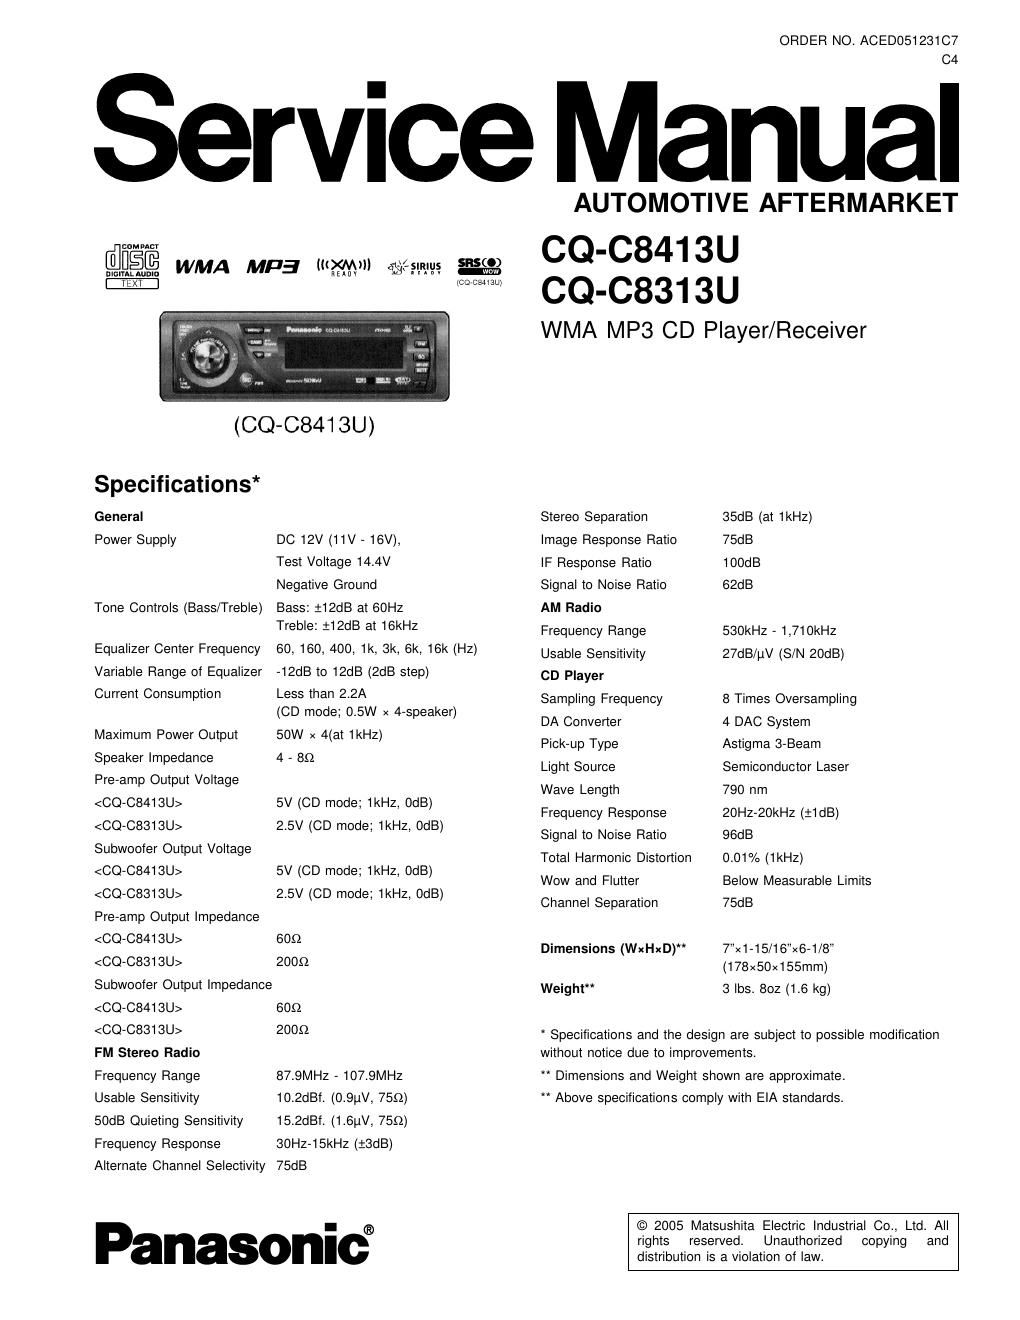 panasonic cq c 8313 u service manual